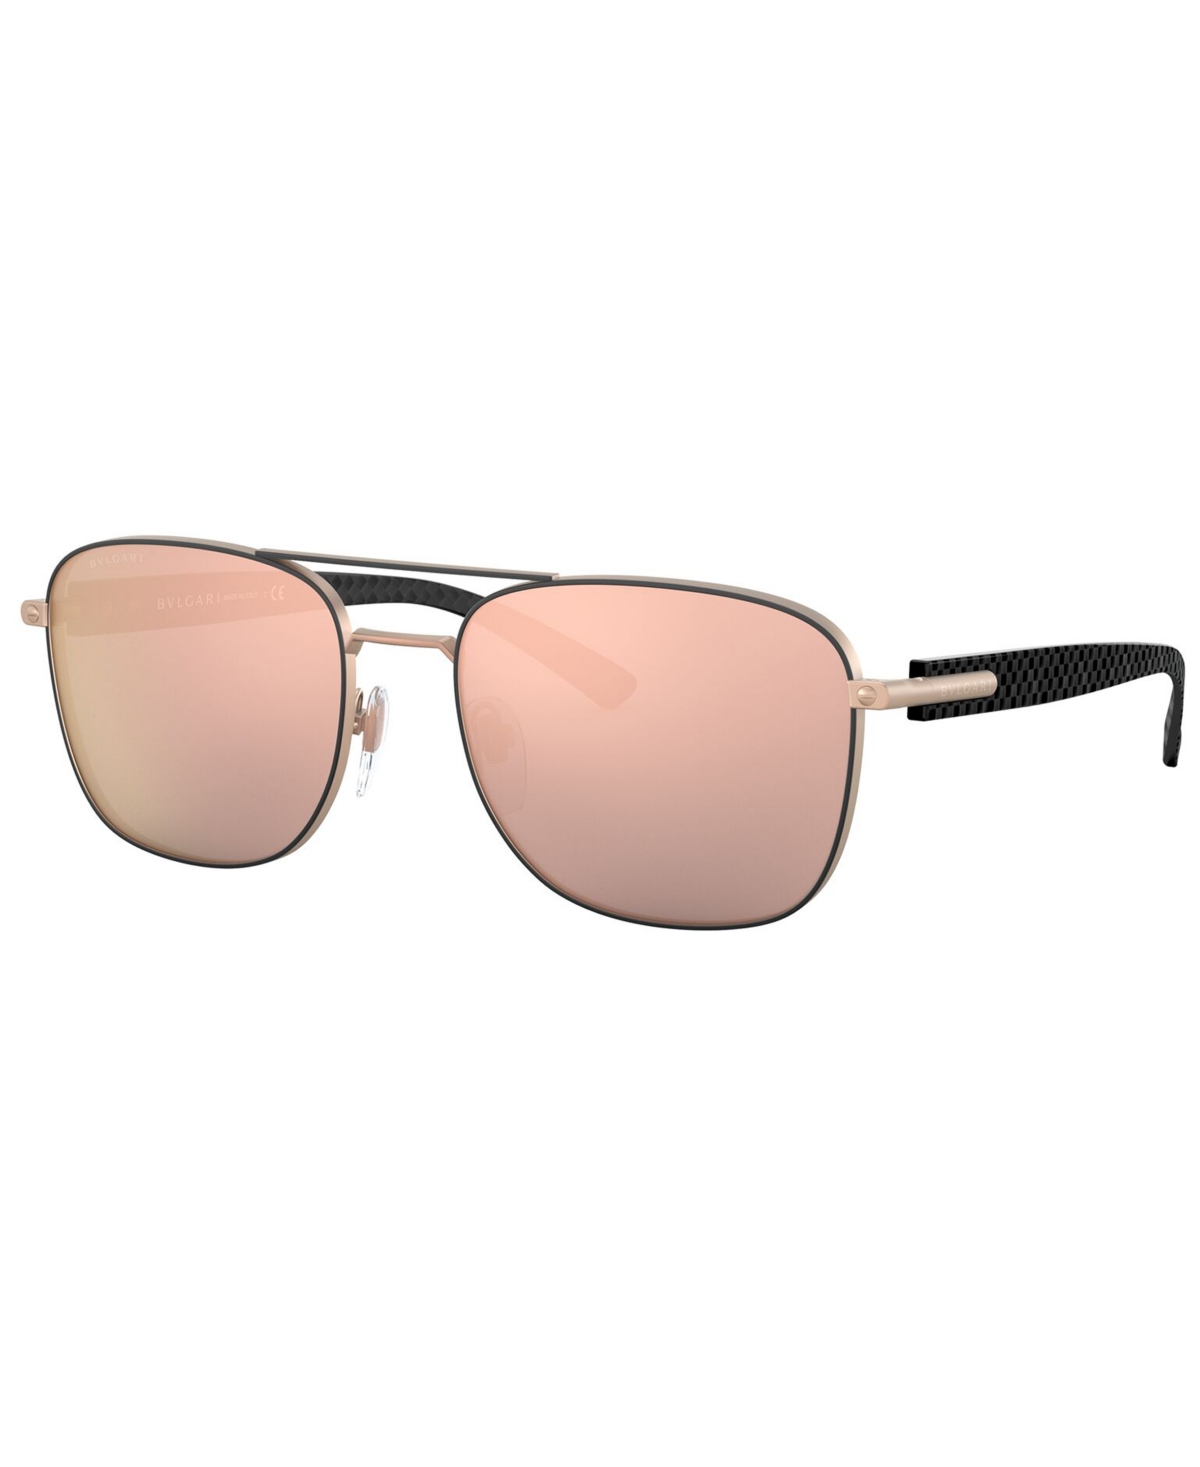 Bvlgari Men's Sunglasses In Matte Black,matte Pink Gold,grey Mirror